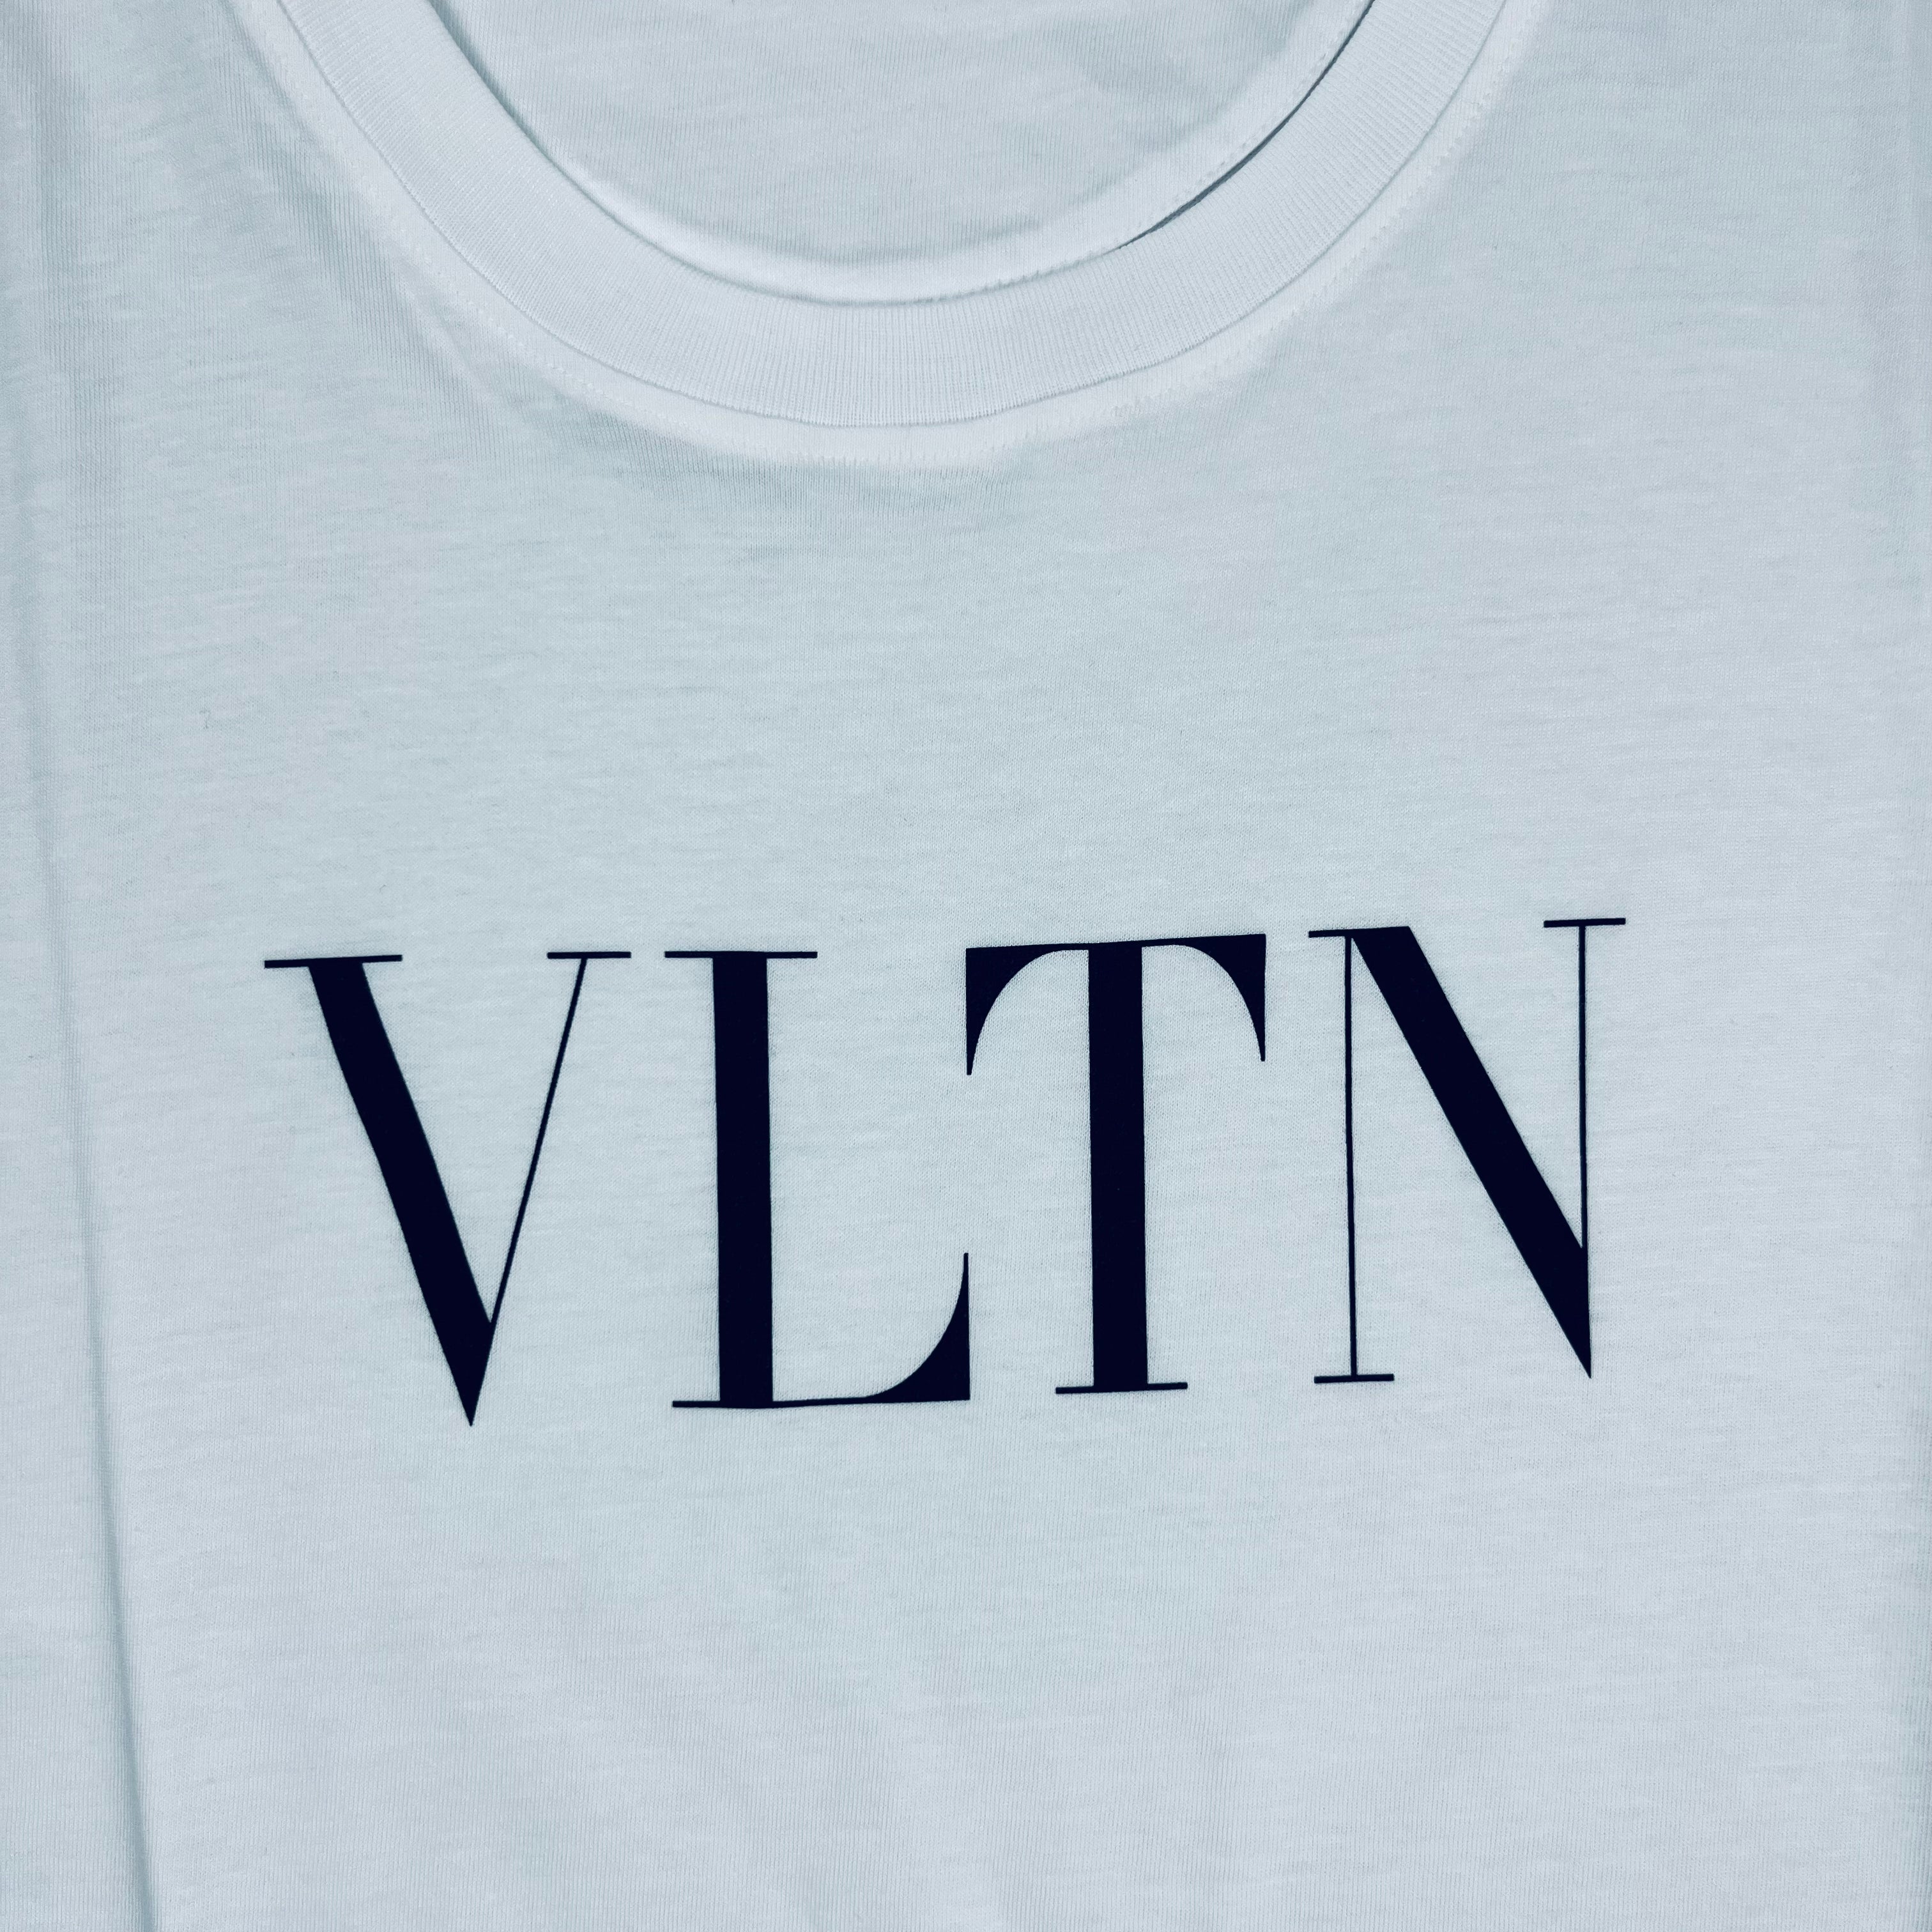 Valentino Logo T-Shirt